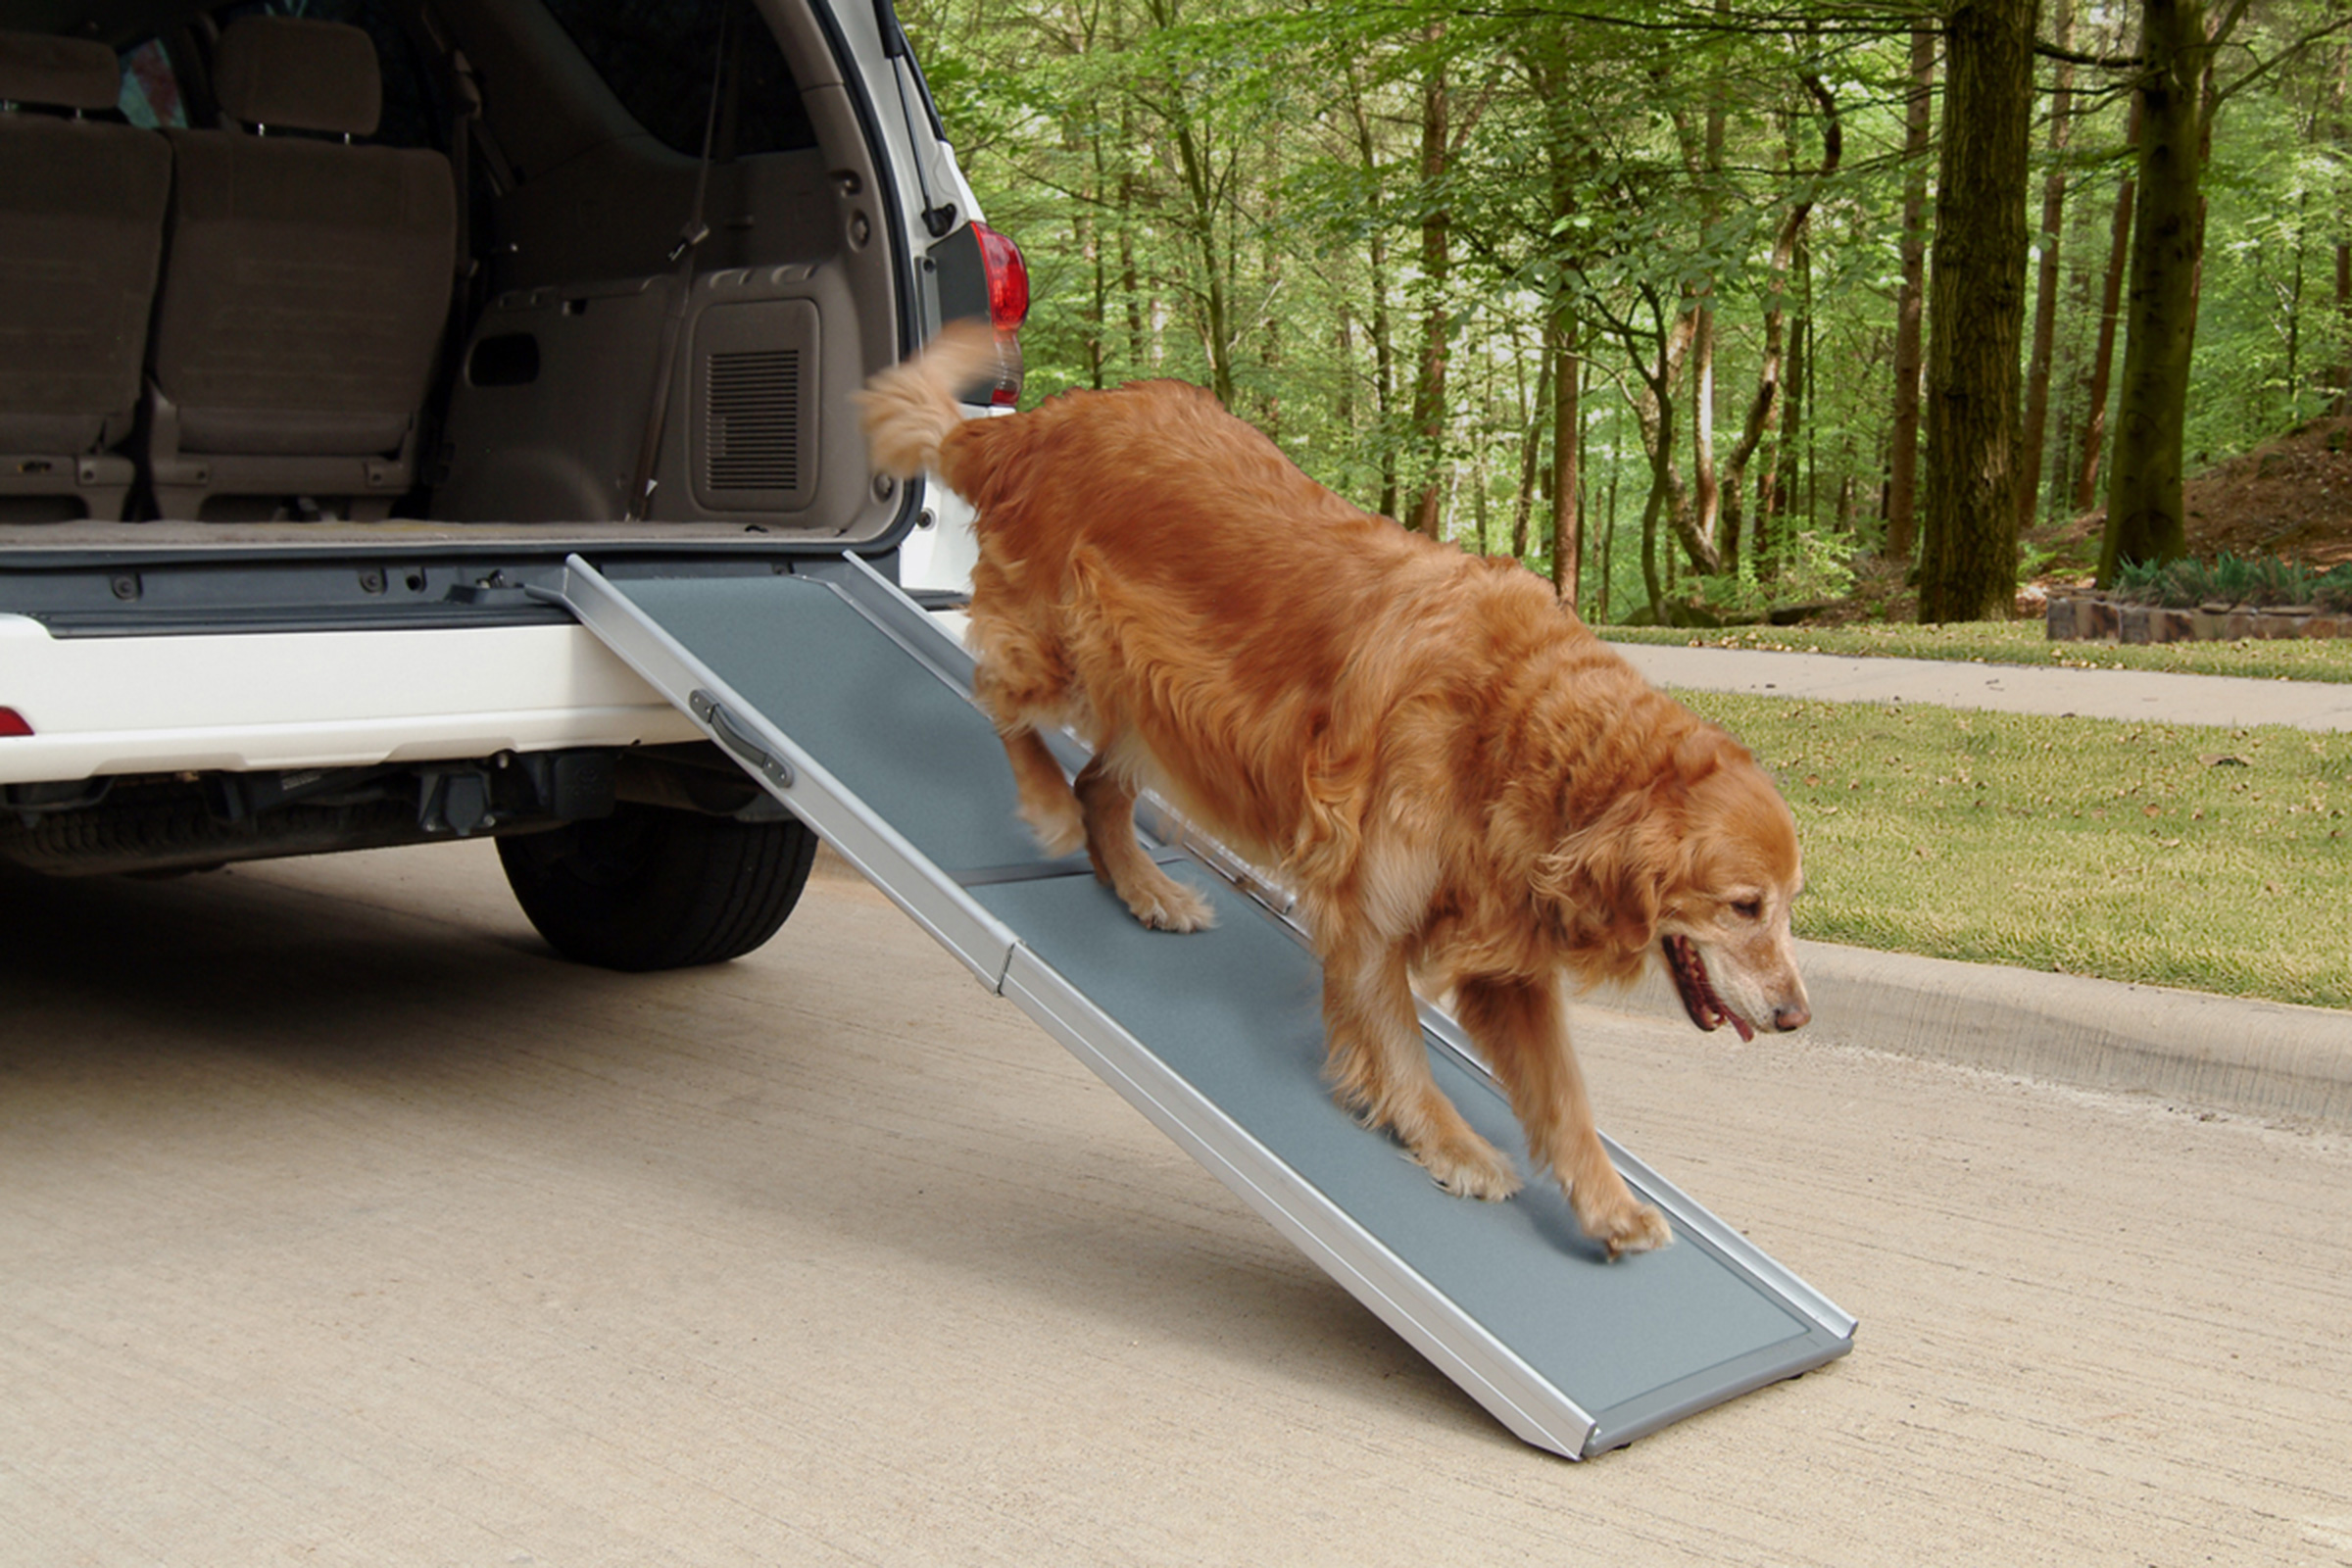 ramp to get dog in car